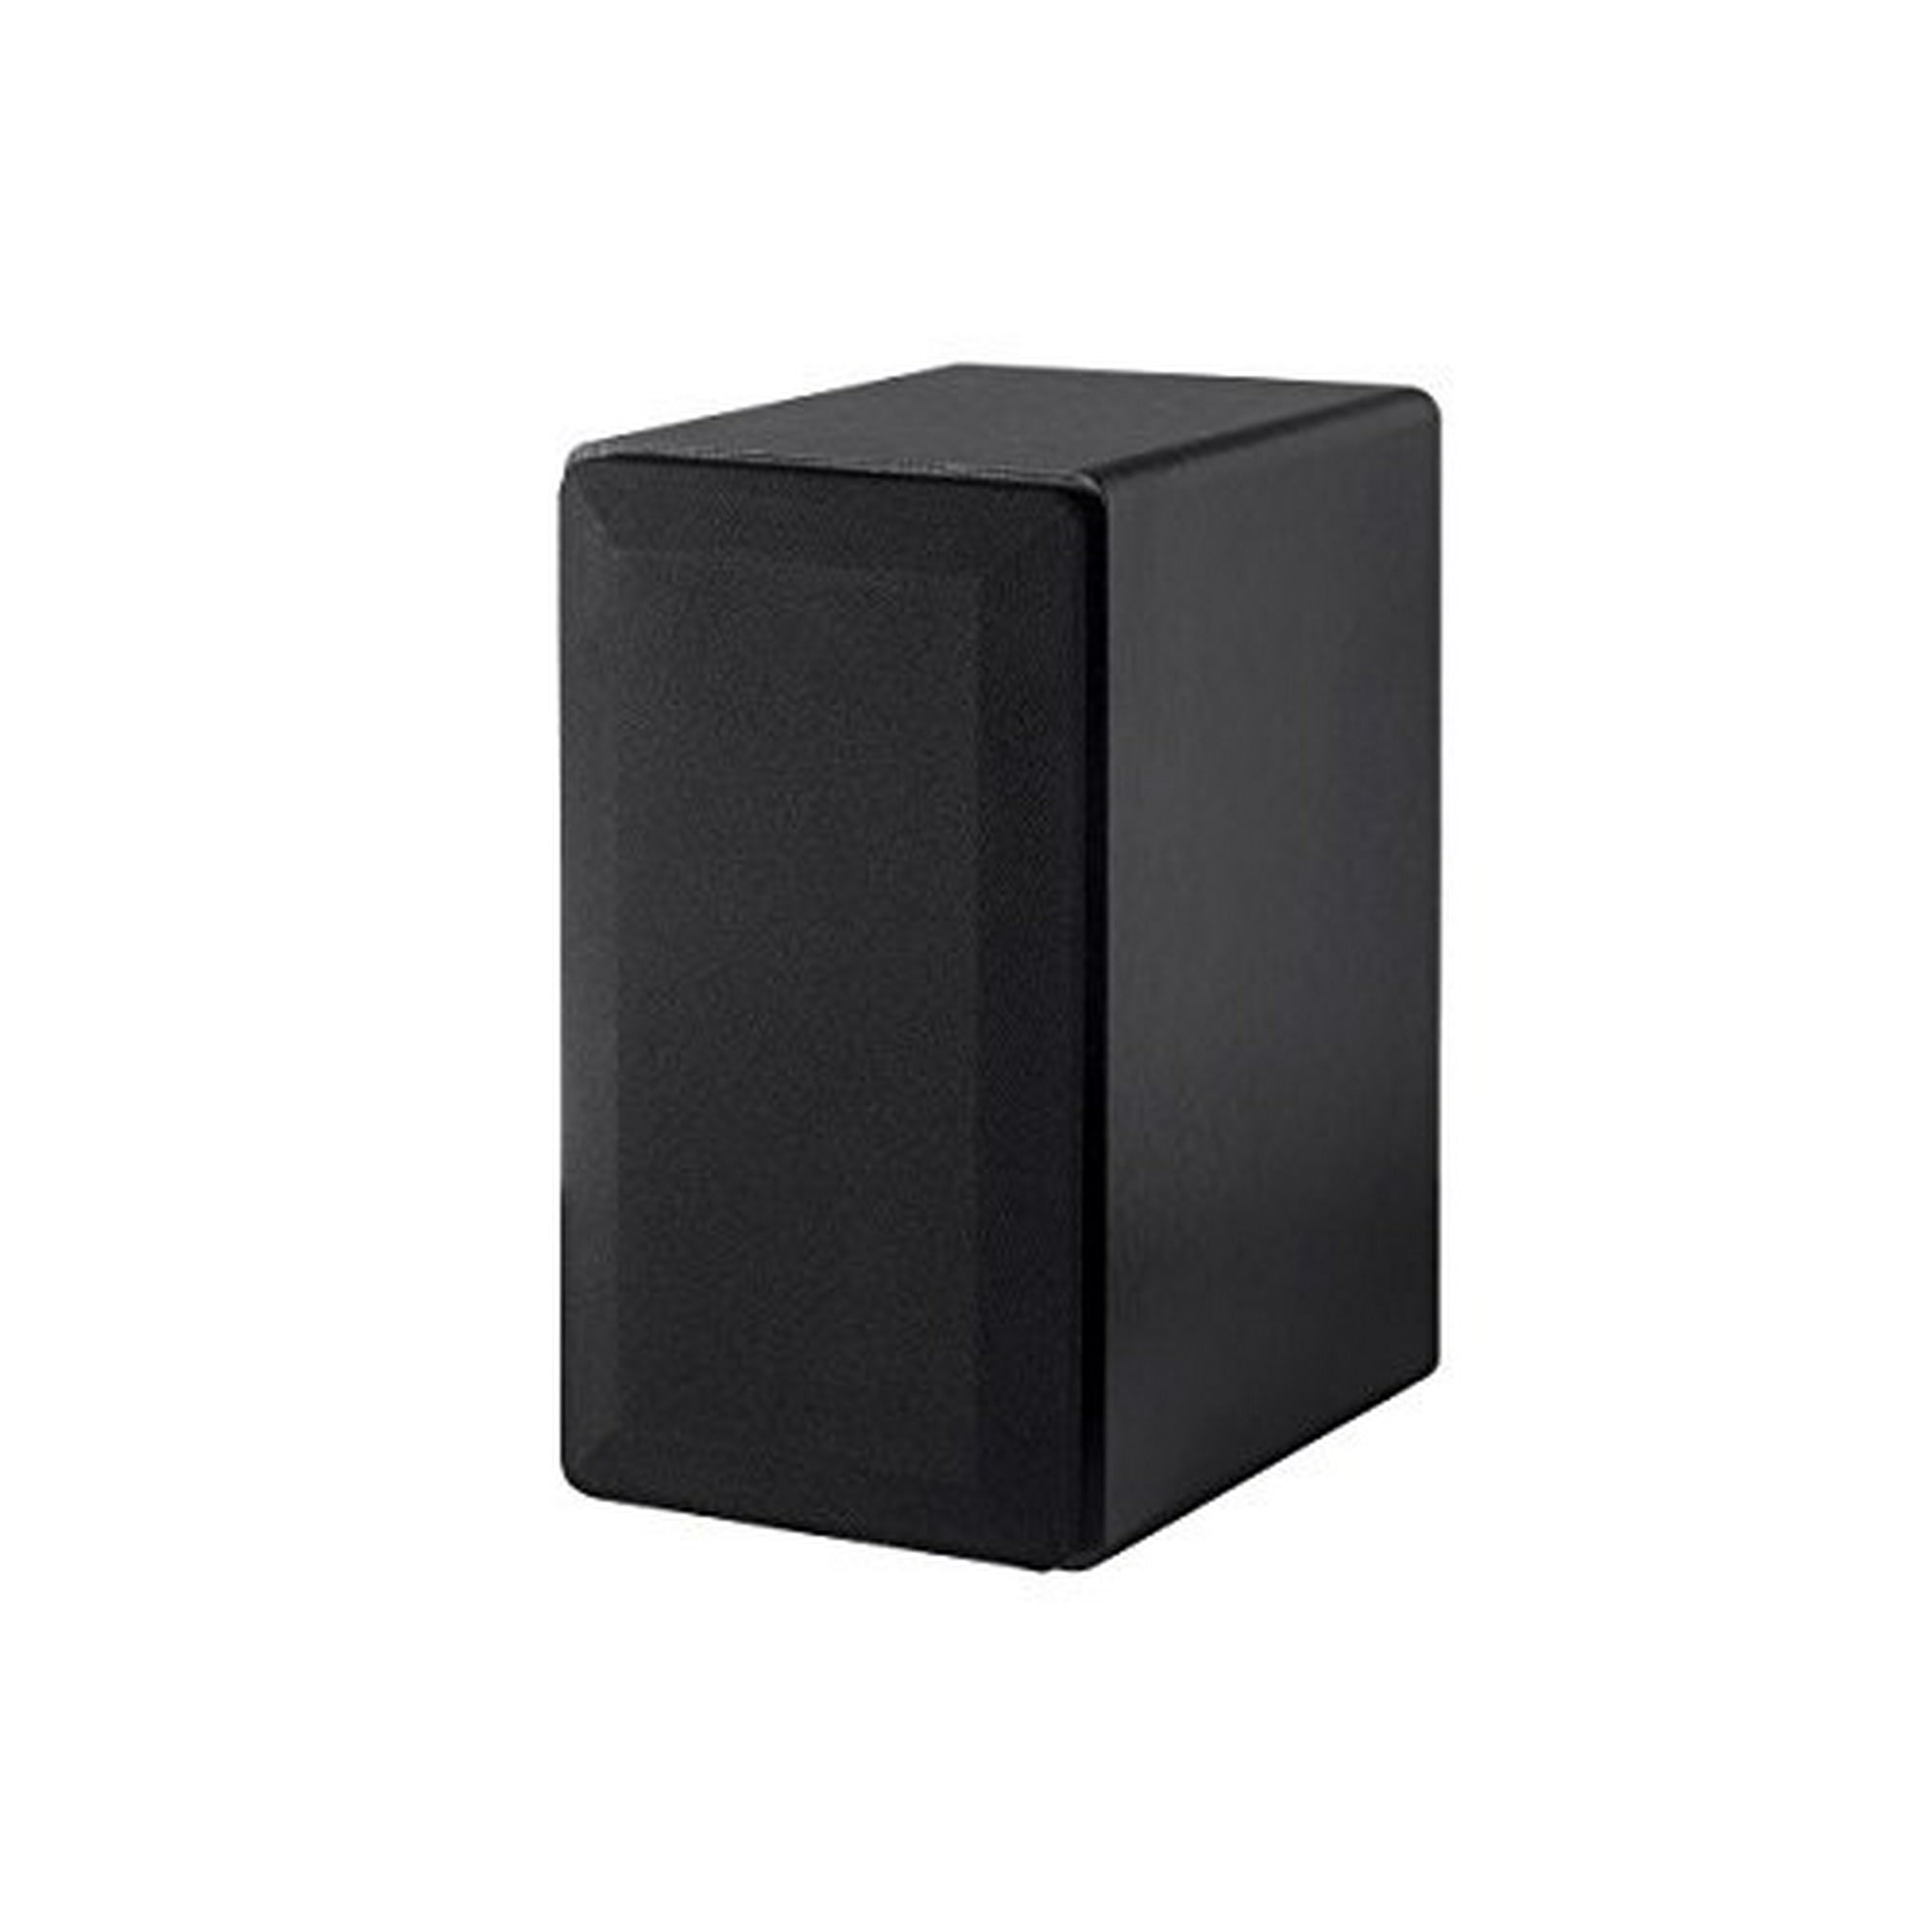 Monoprice Select 4 Inch 2 Way Bookshelf Speakers Pair Black